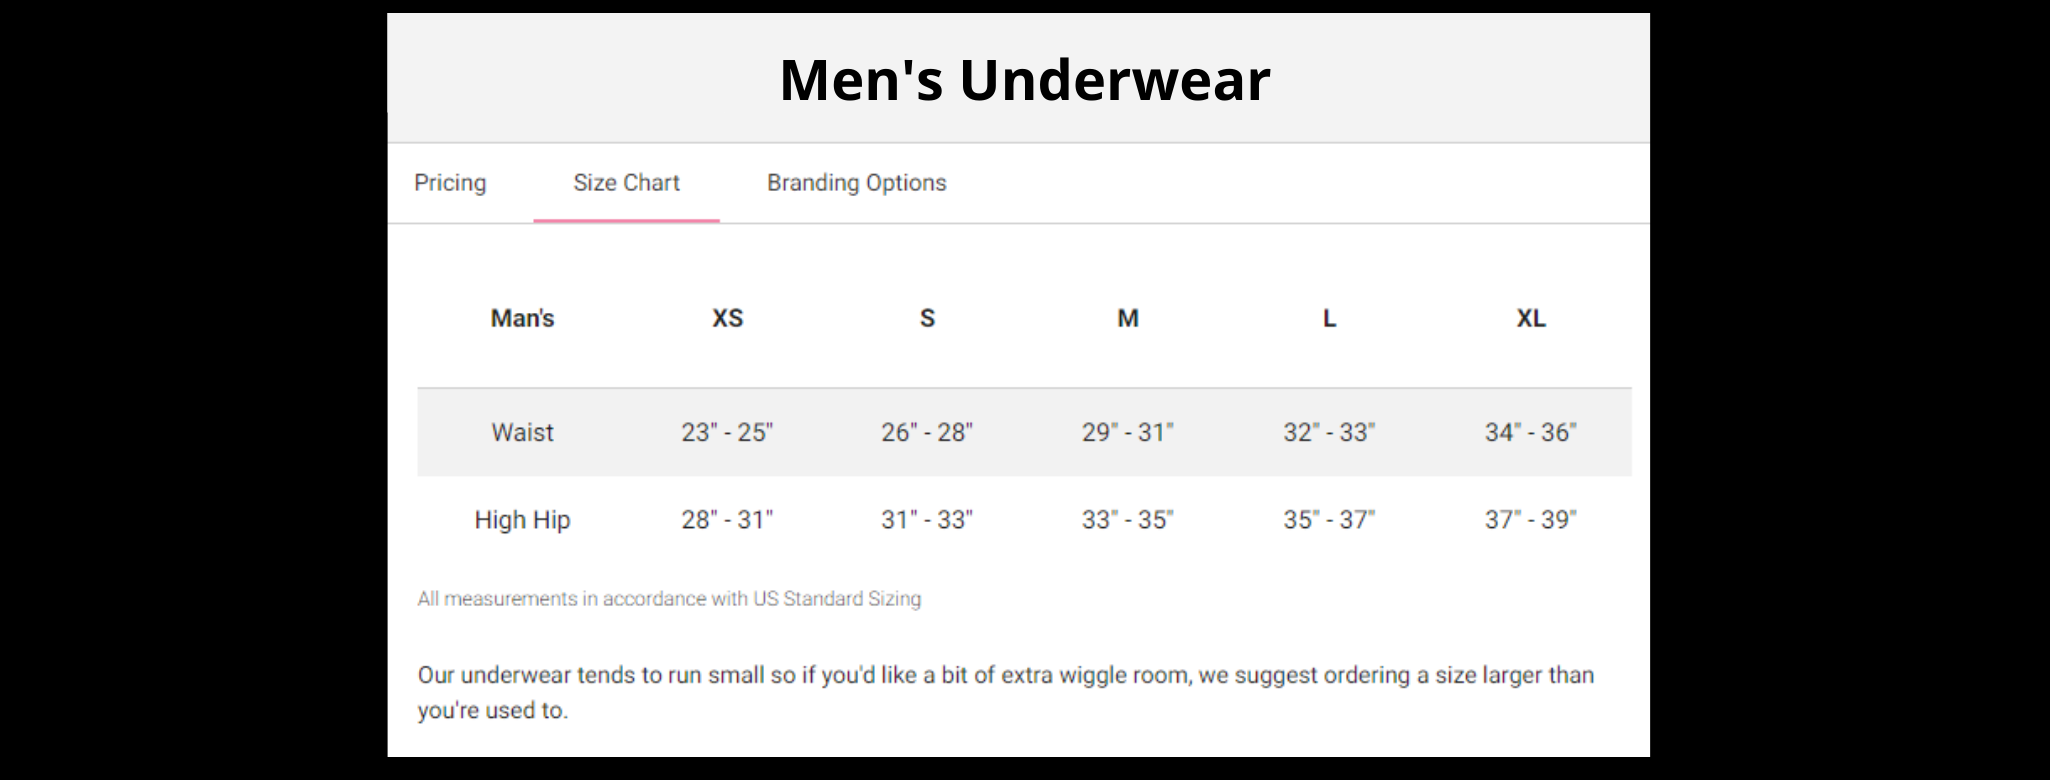 Boxer Briefs for Men: Flower Bowl Design, Sizing